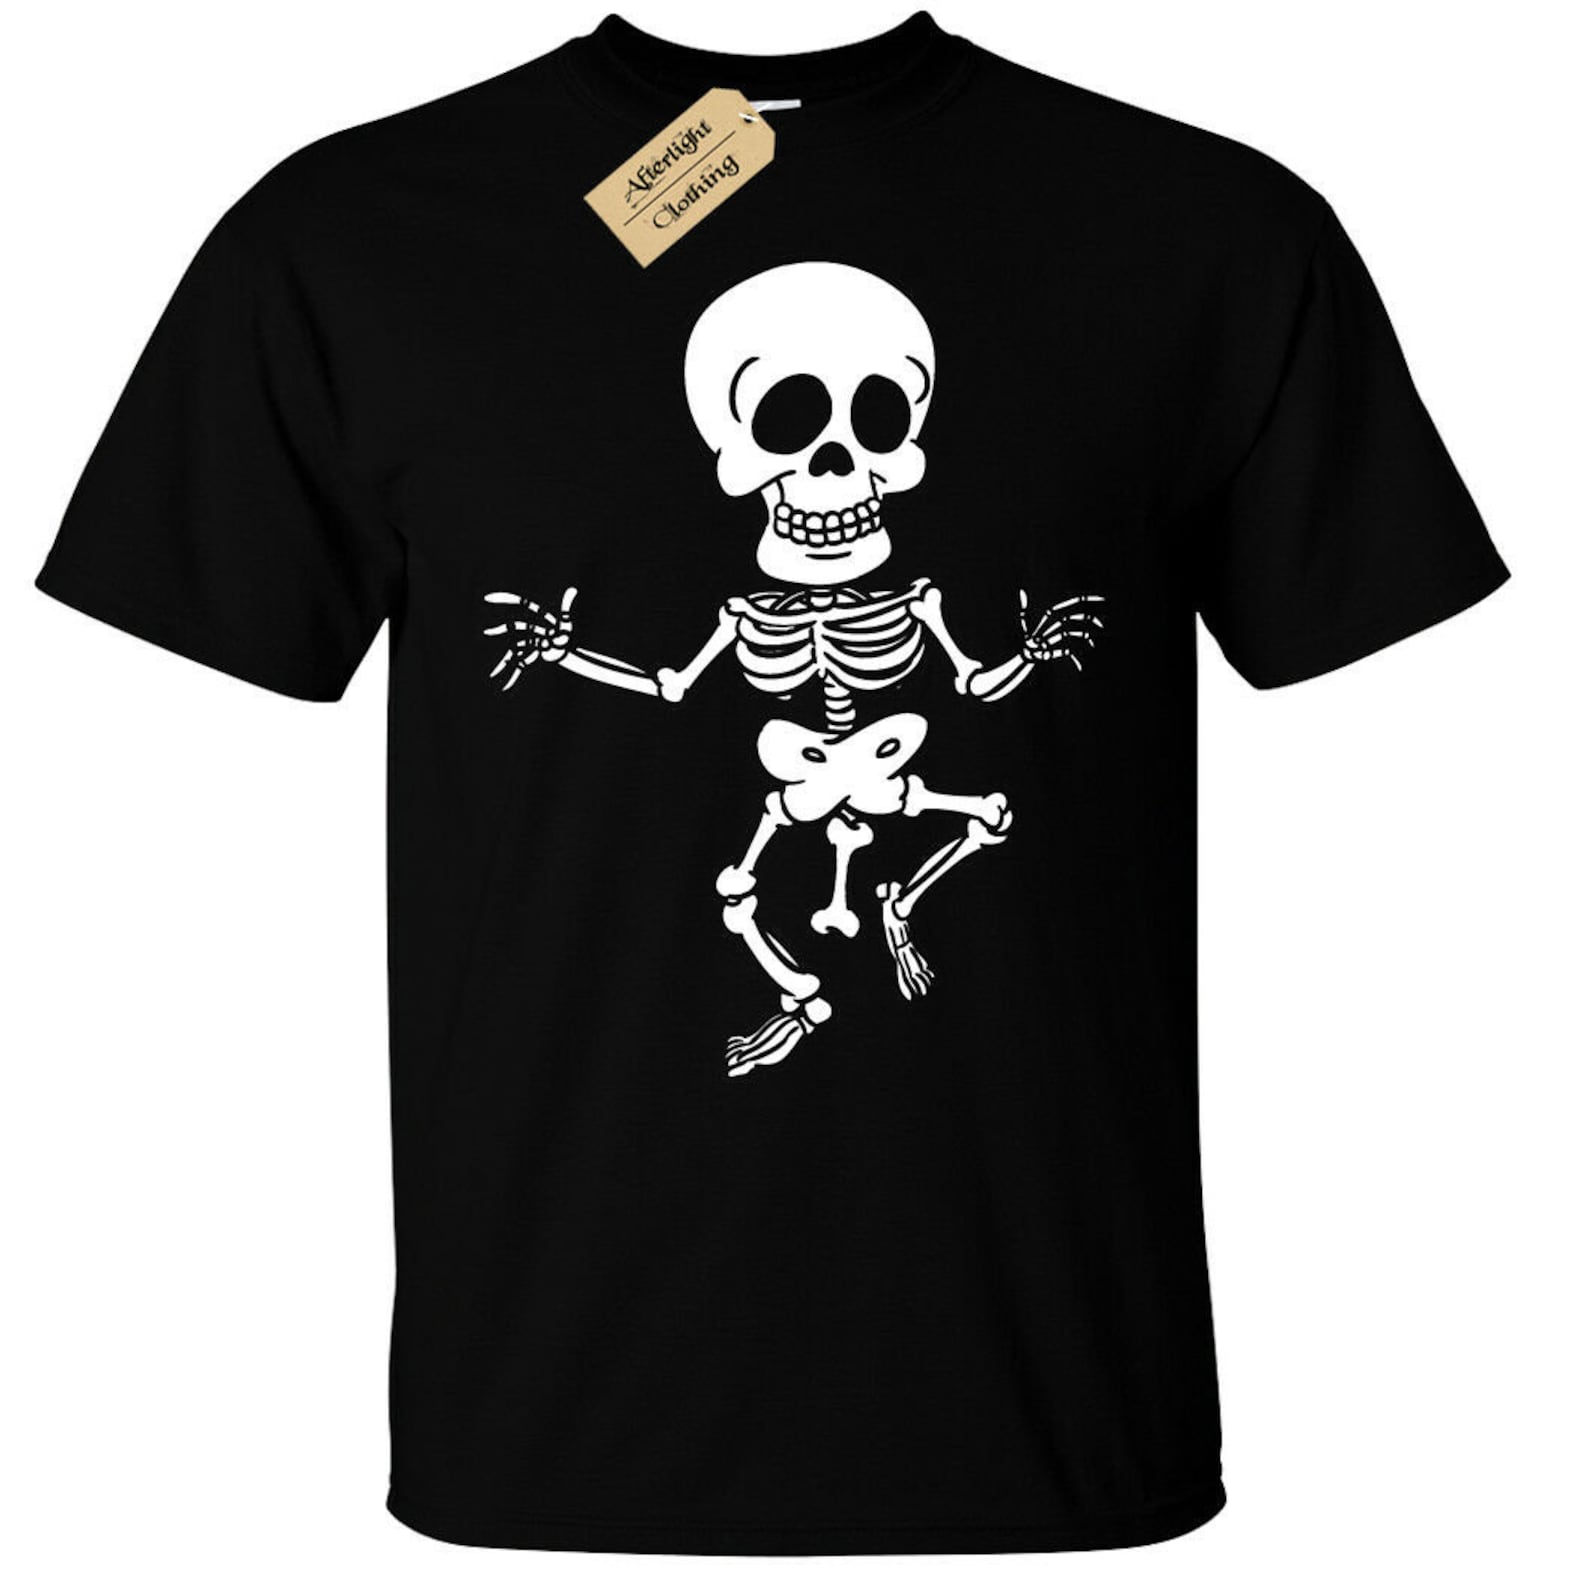 Rude Skeleton T-Shirt Funny mens bones joke tee top | Etsy